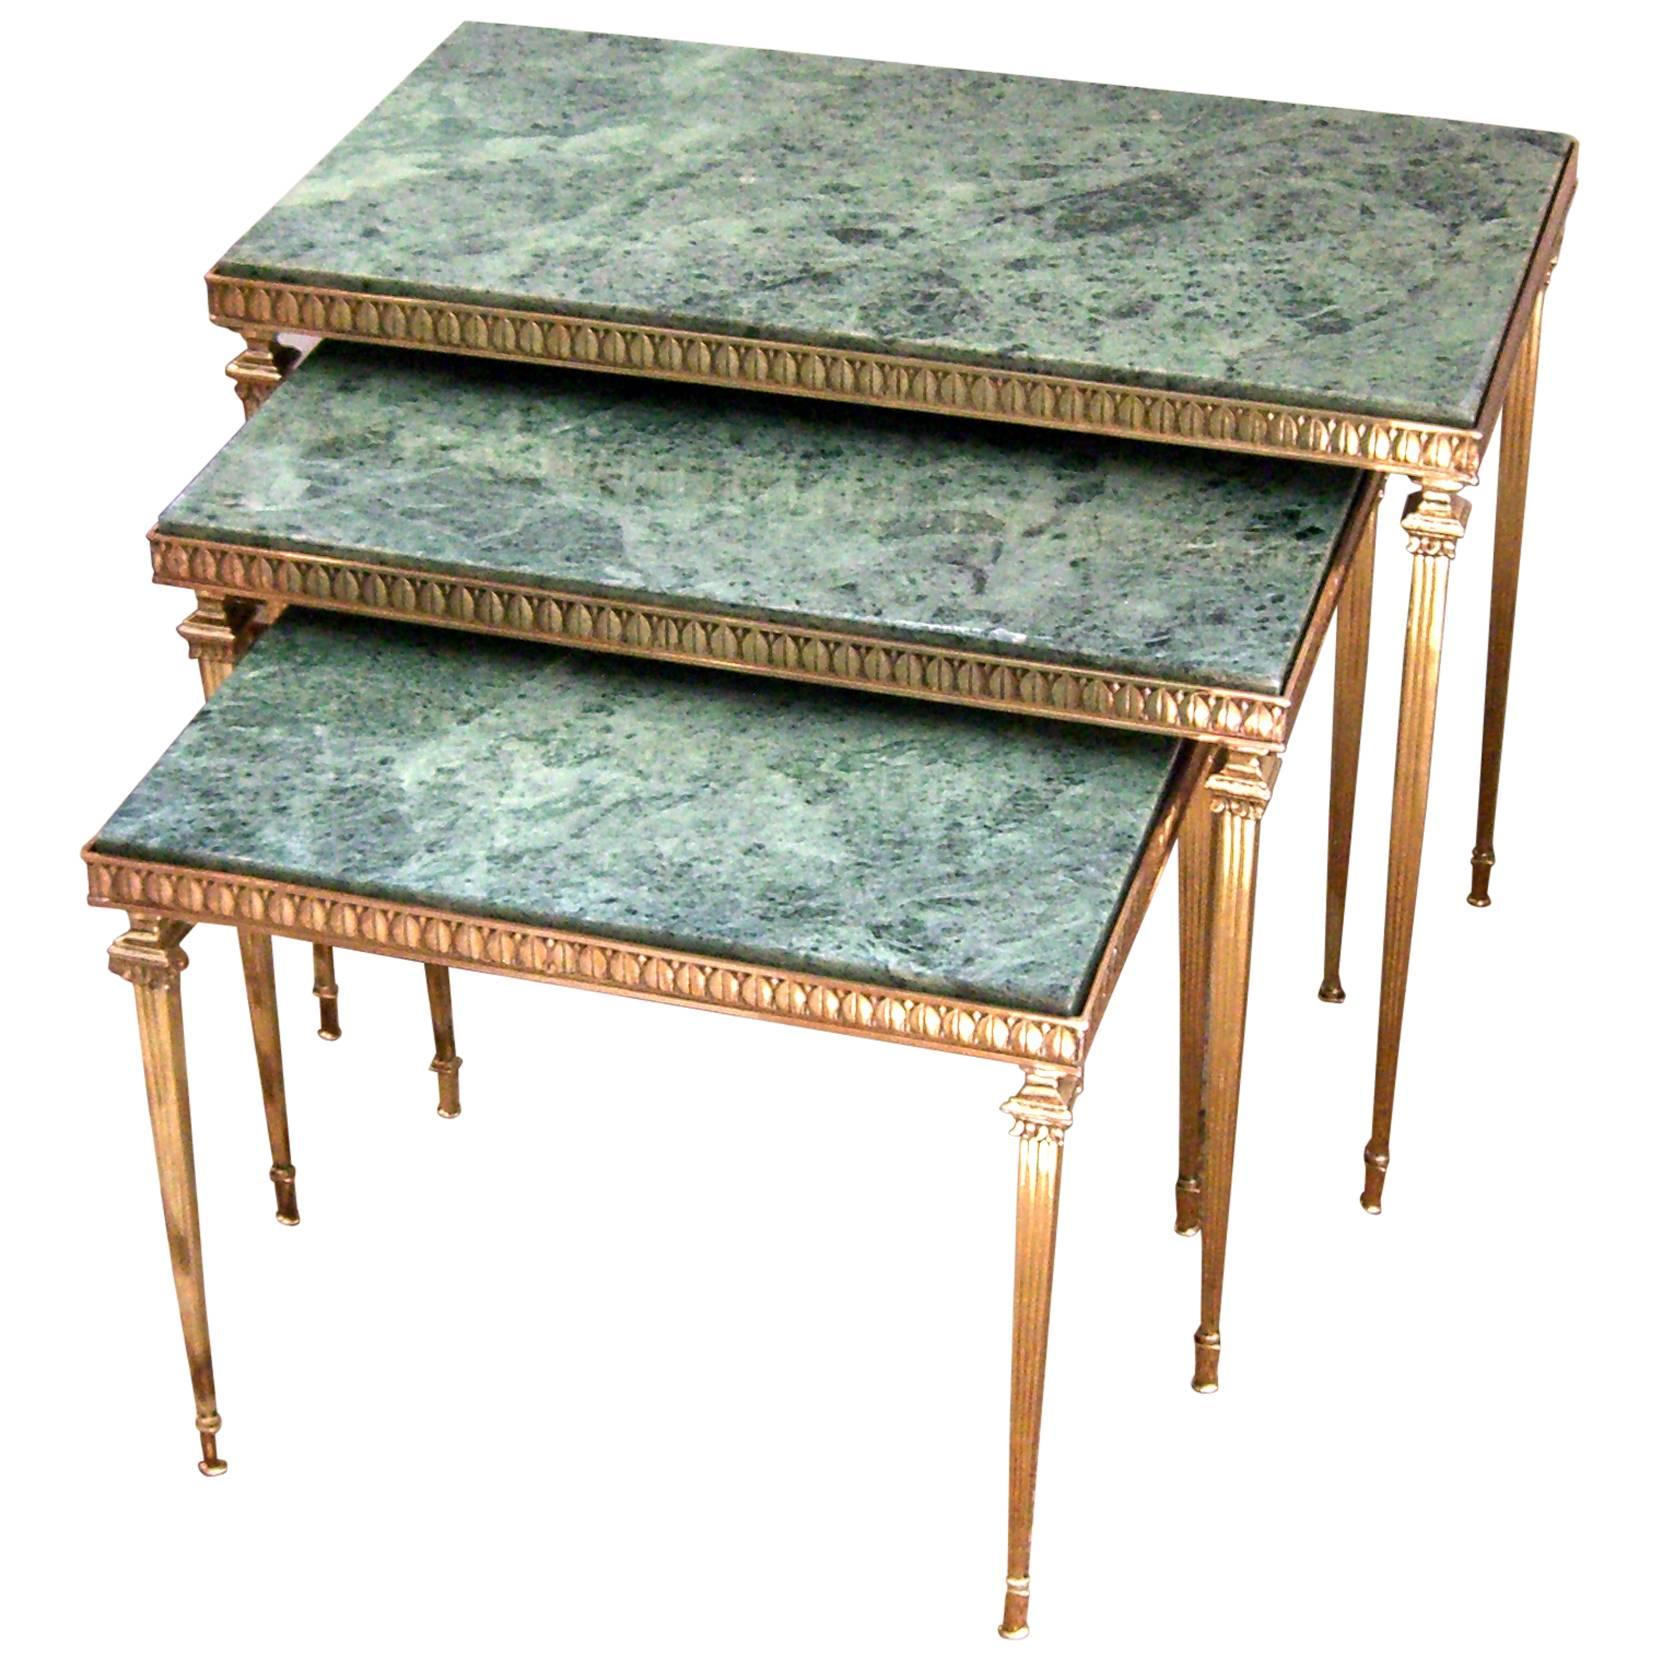 Tables are turning. Стол обеденный зеленый мрамор. Обеденный стол с каменной столешницей. Стол Brass Table.